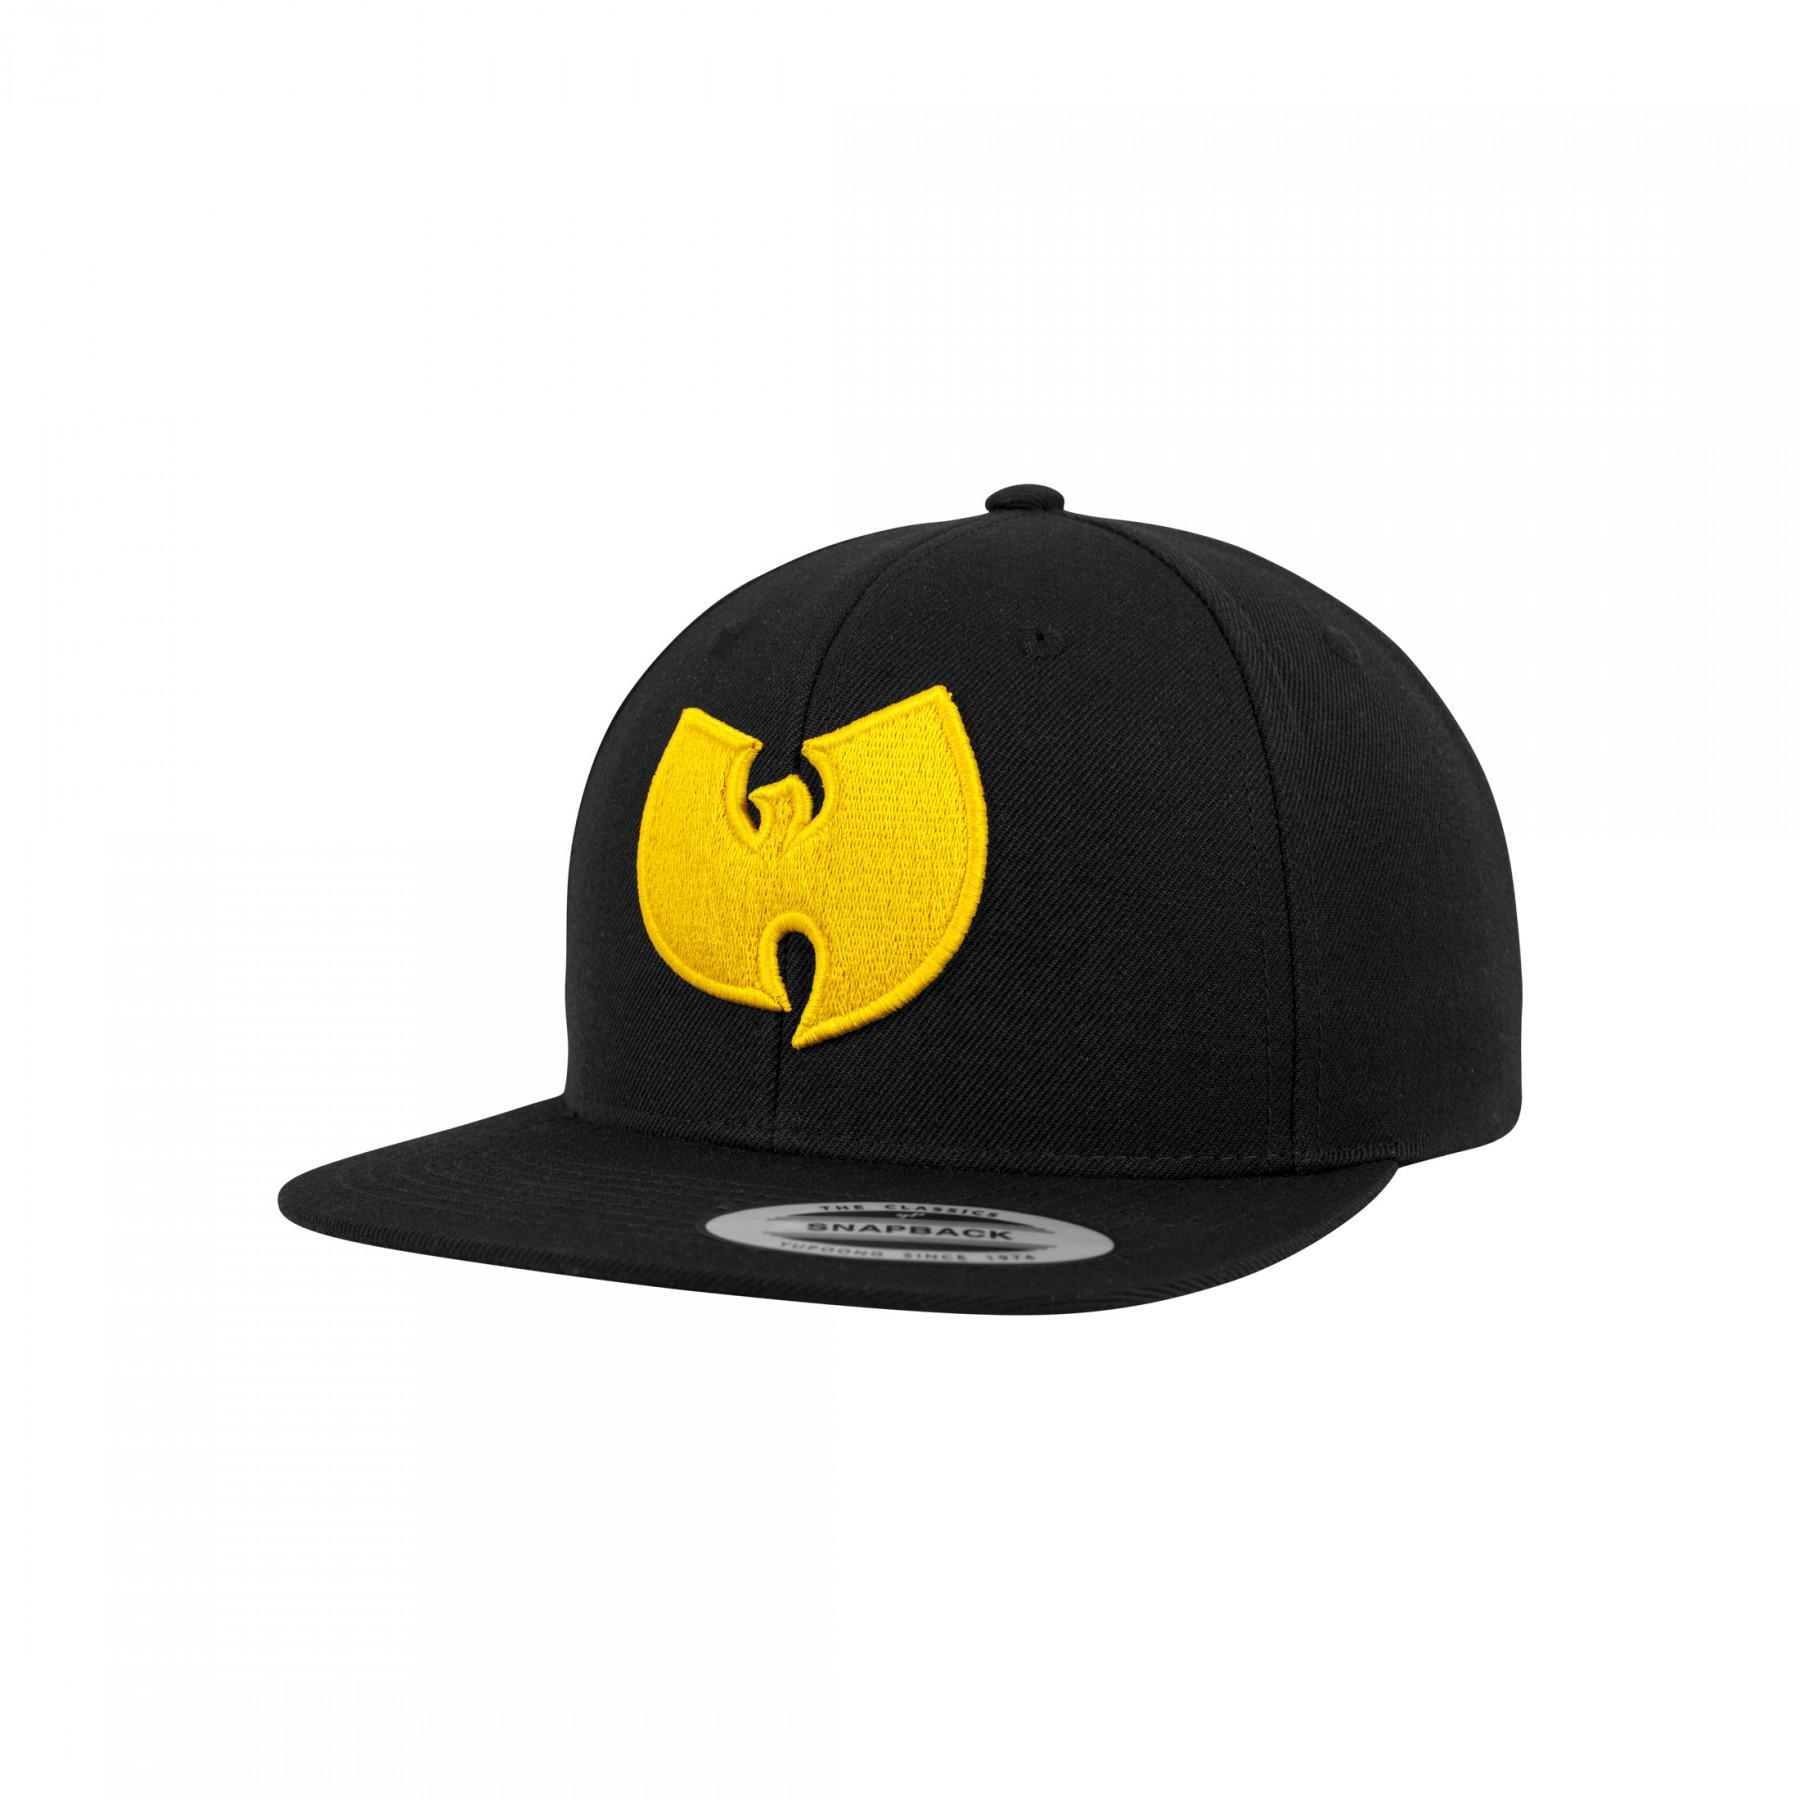 Cap urban classic Wu-wear logo basic